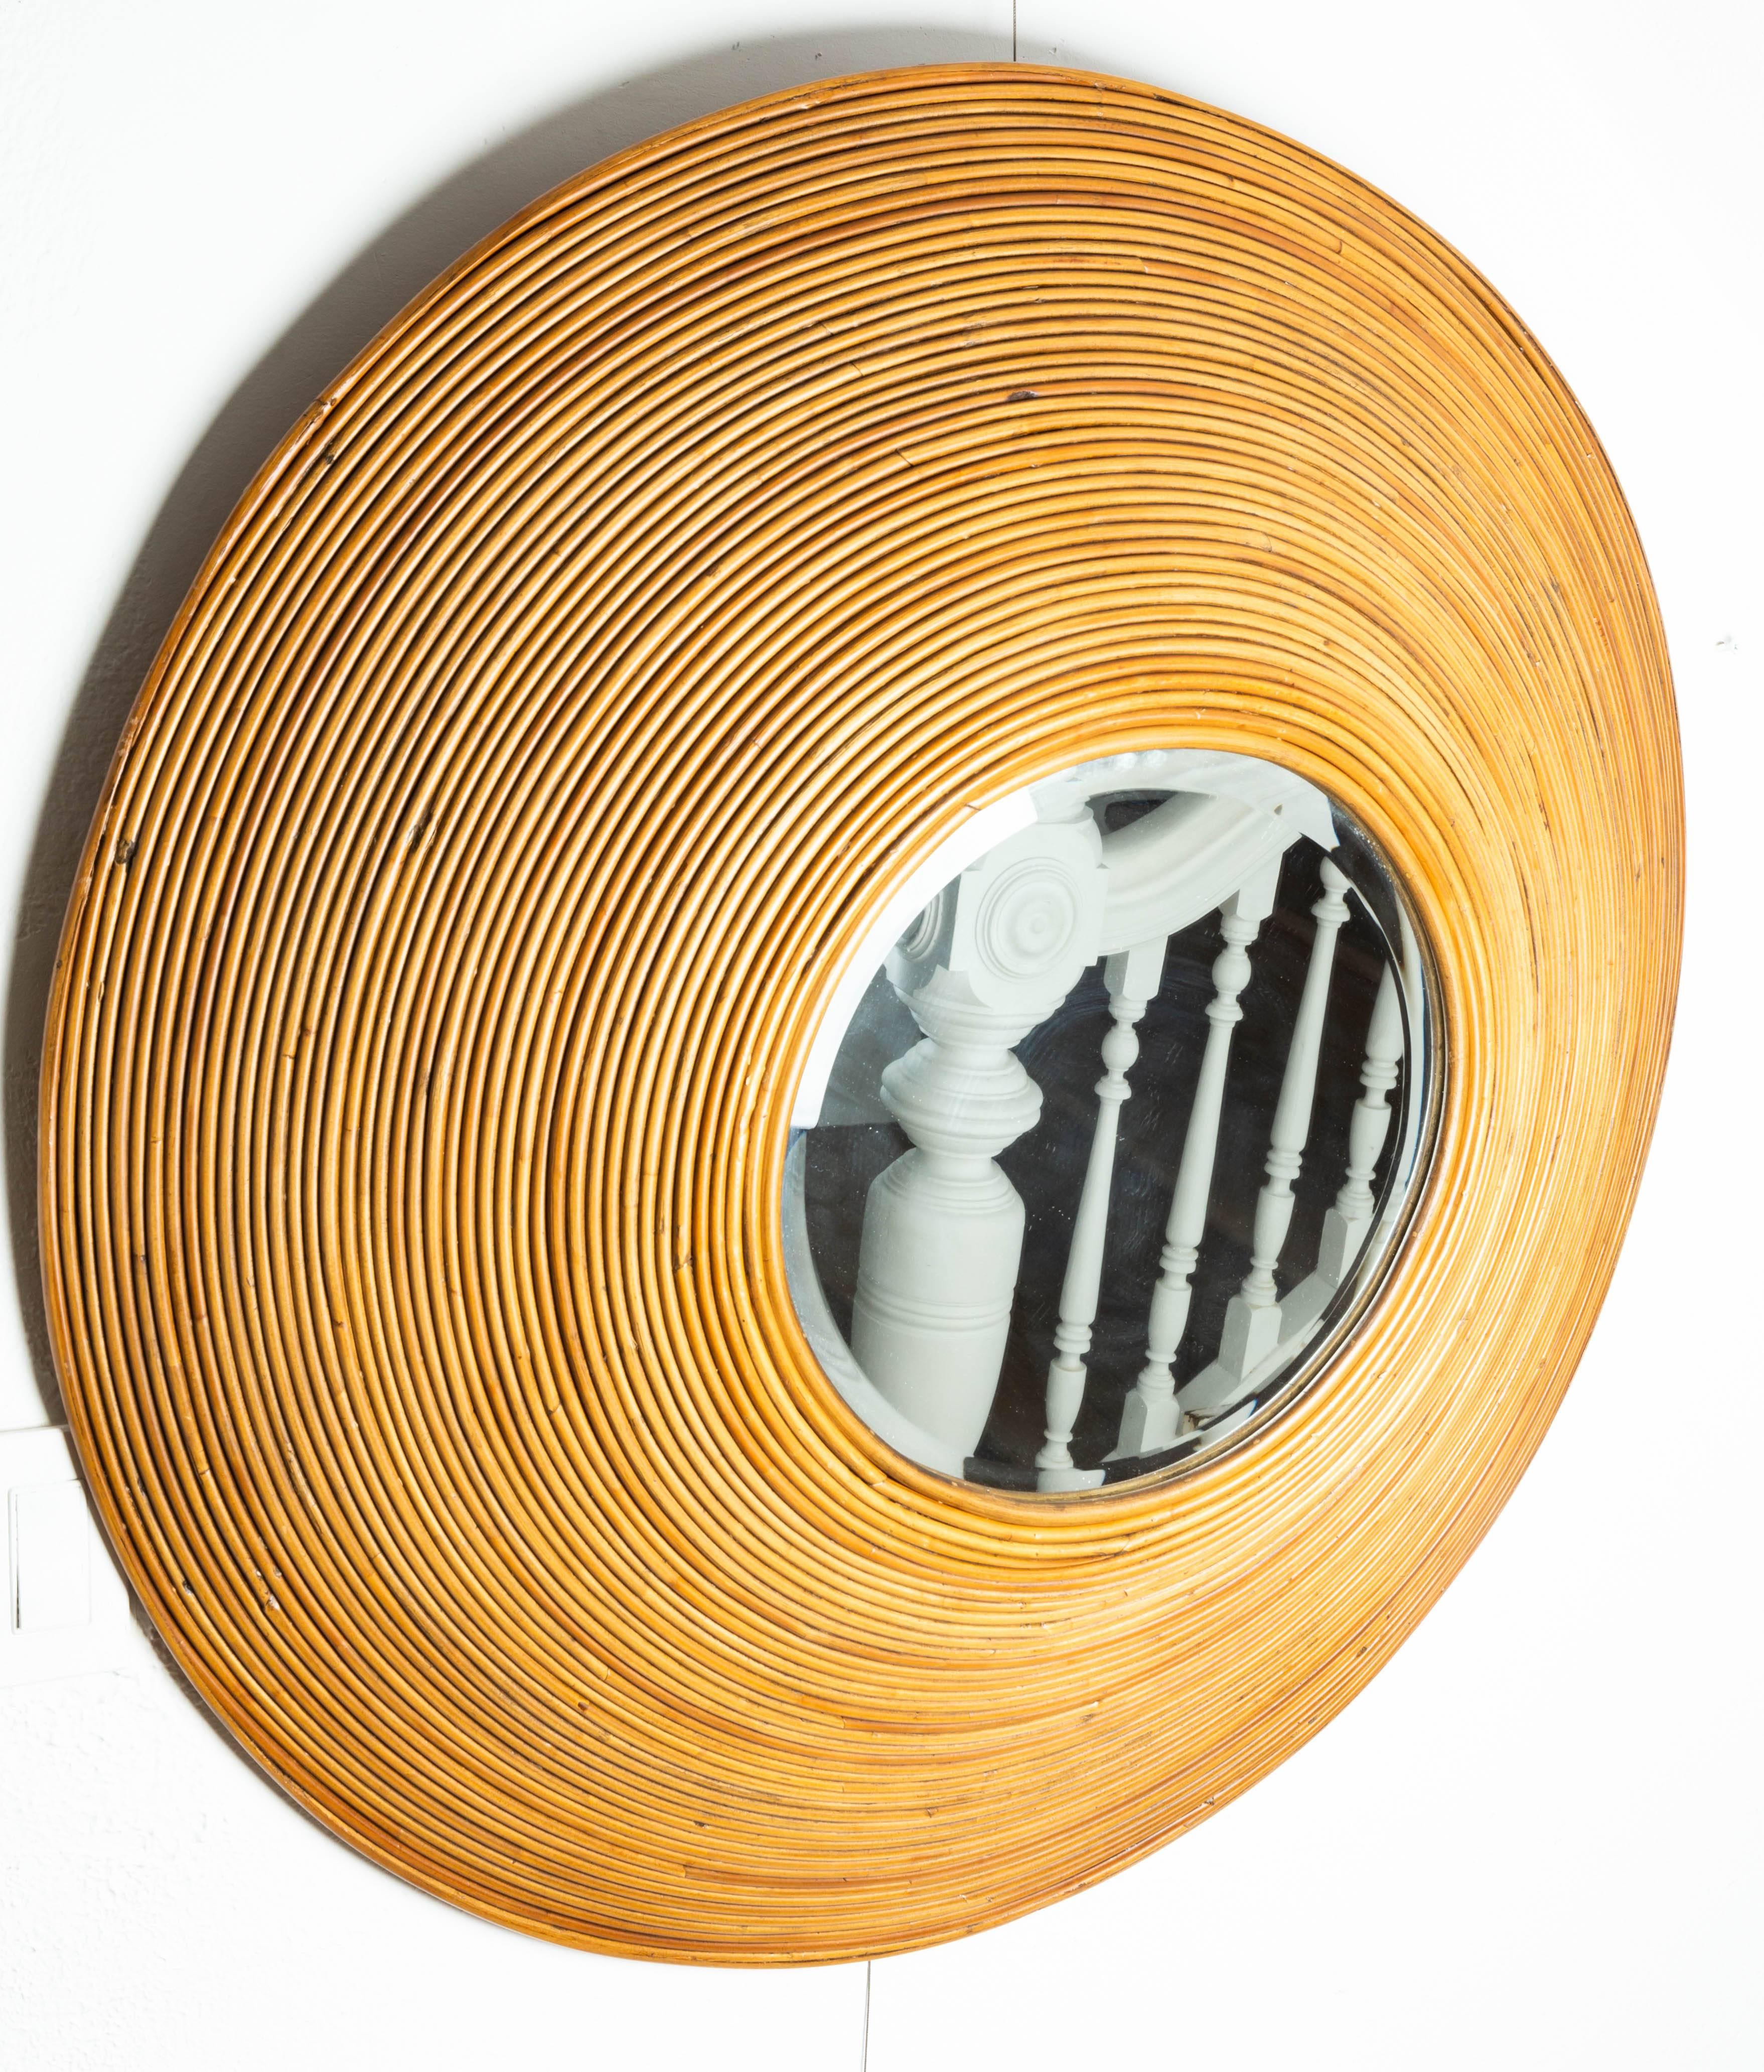 Large Circular Beveled Mirror with Bamboo Reed Surround 1